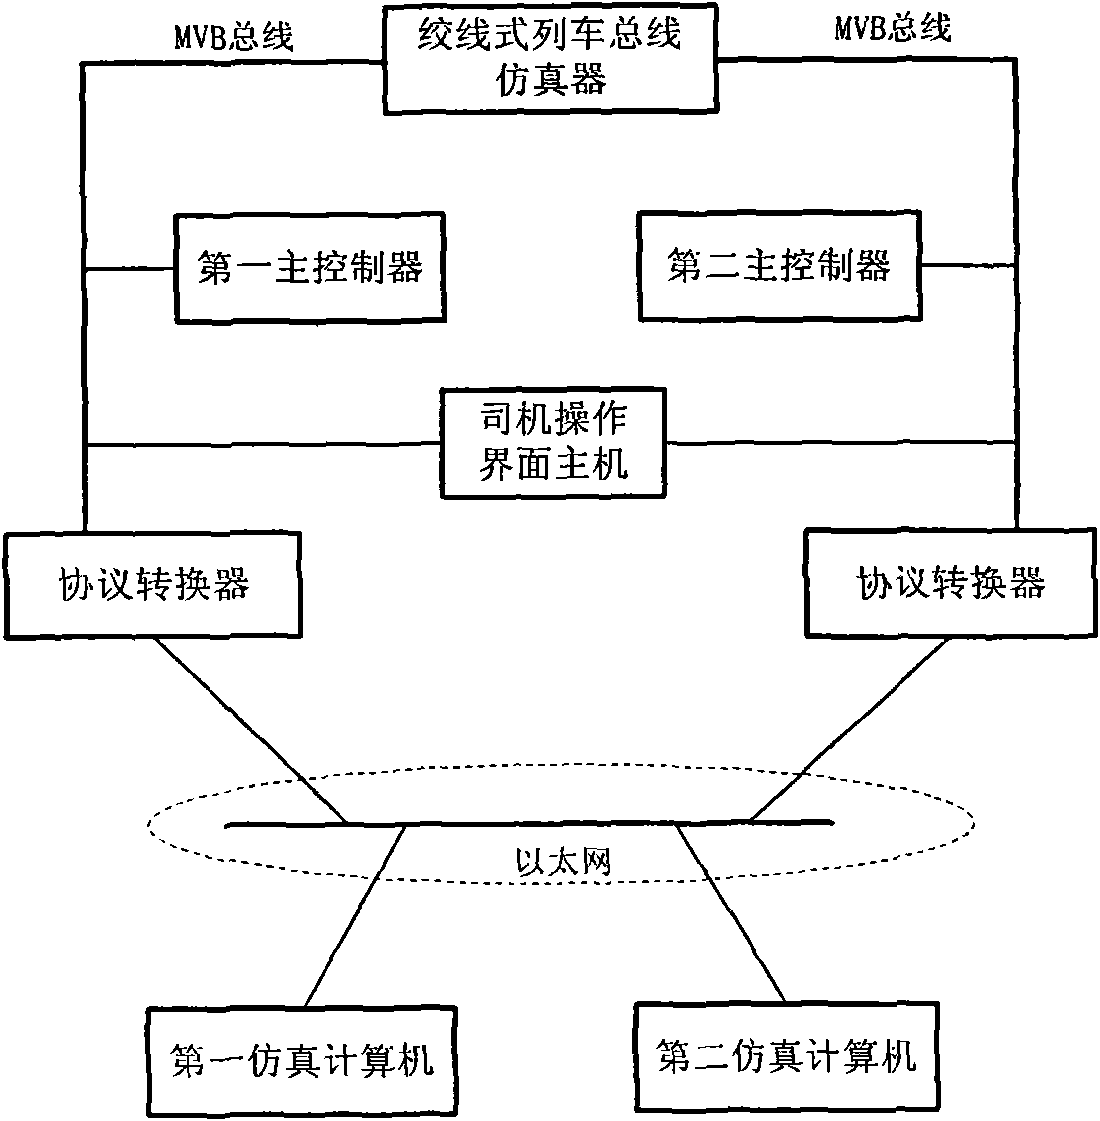 Simulation device for network control logic verification of motor train unit